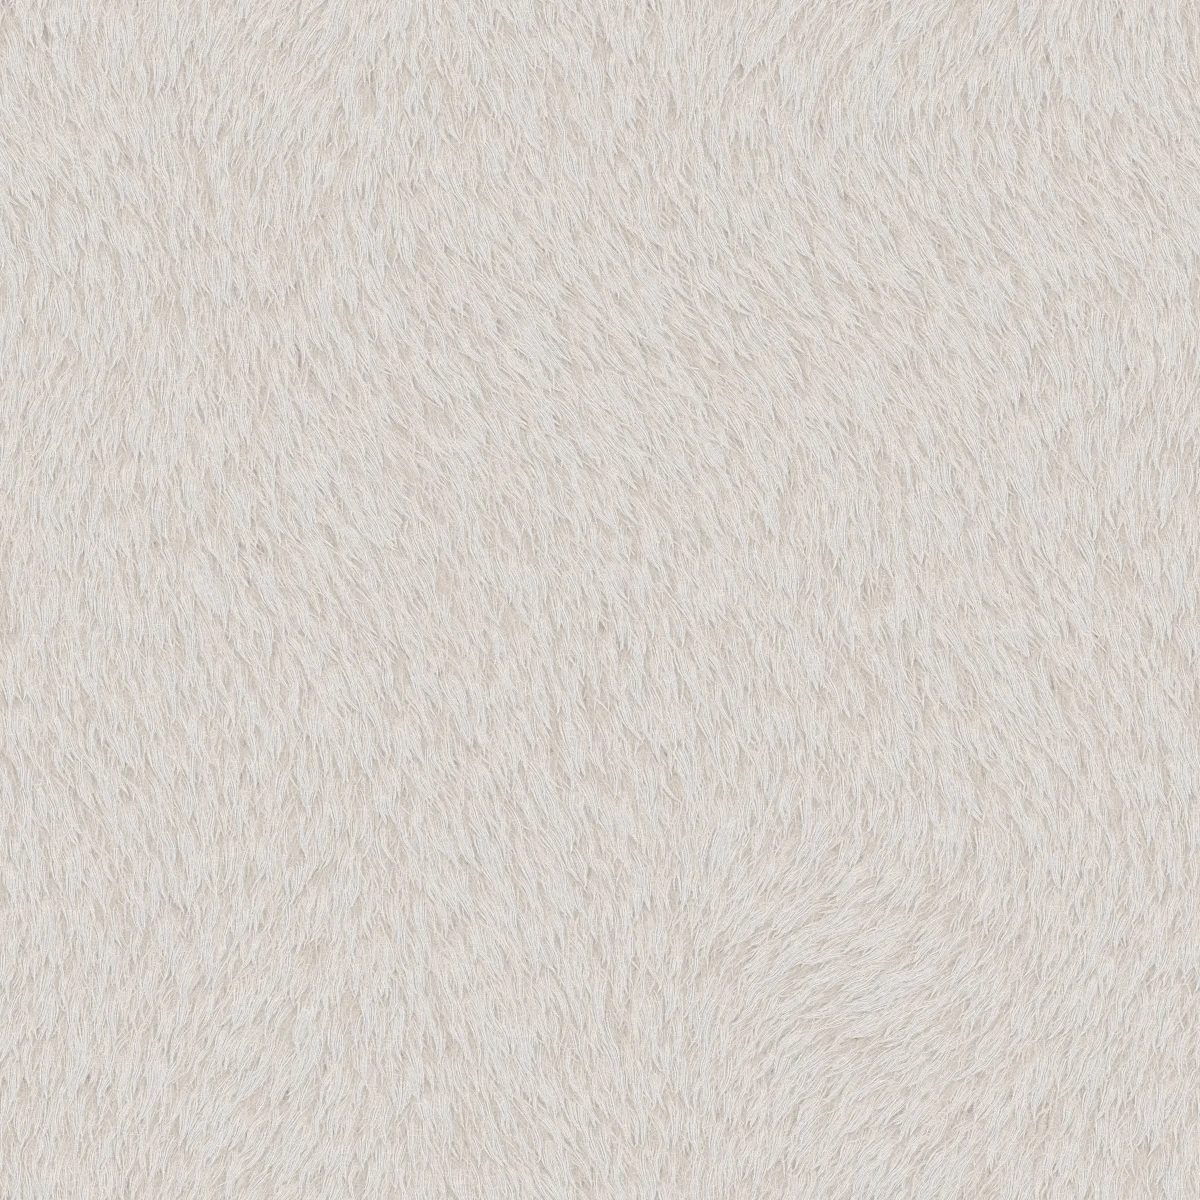 White Fur Fabric PBR Texture